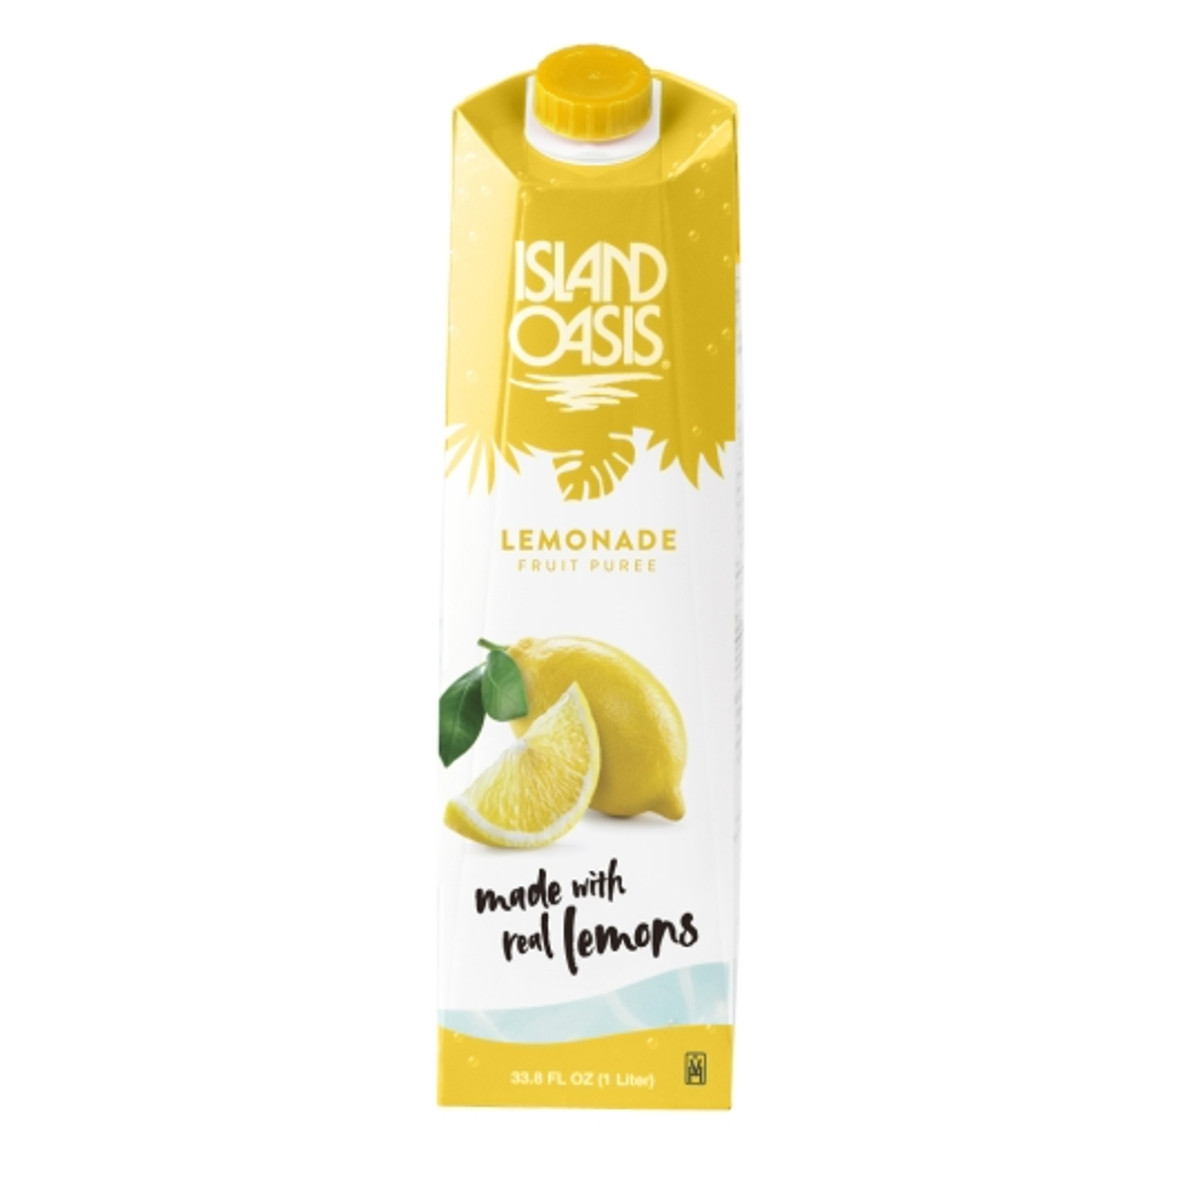 Island Oasis Aseptic Lemonade, 1 Liter, 12 Per Case